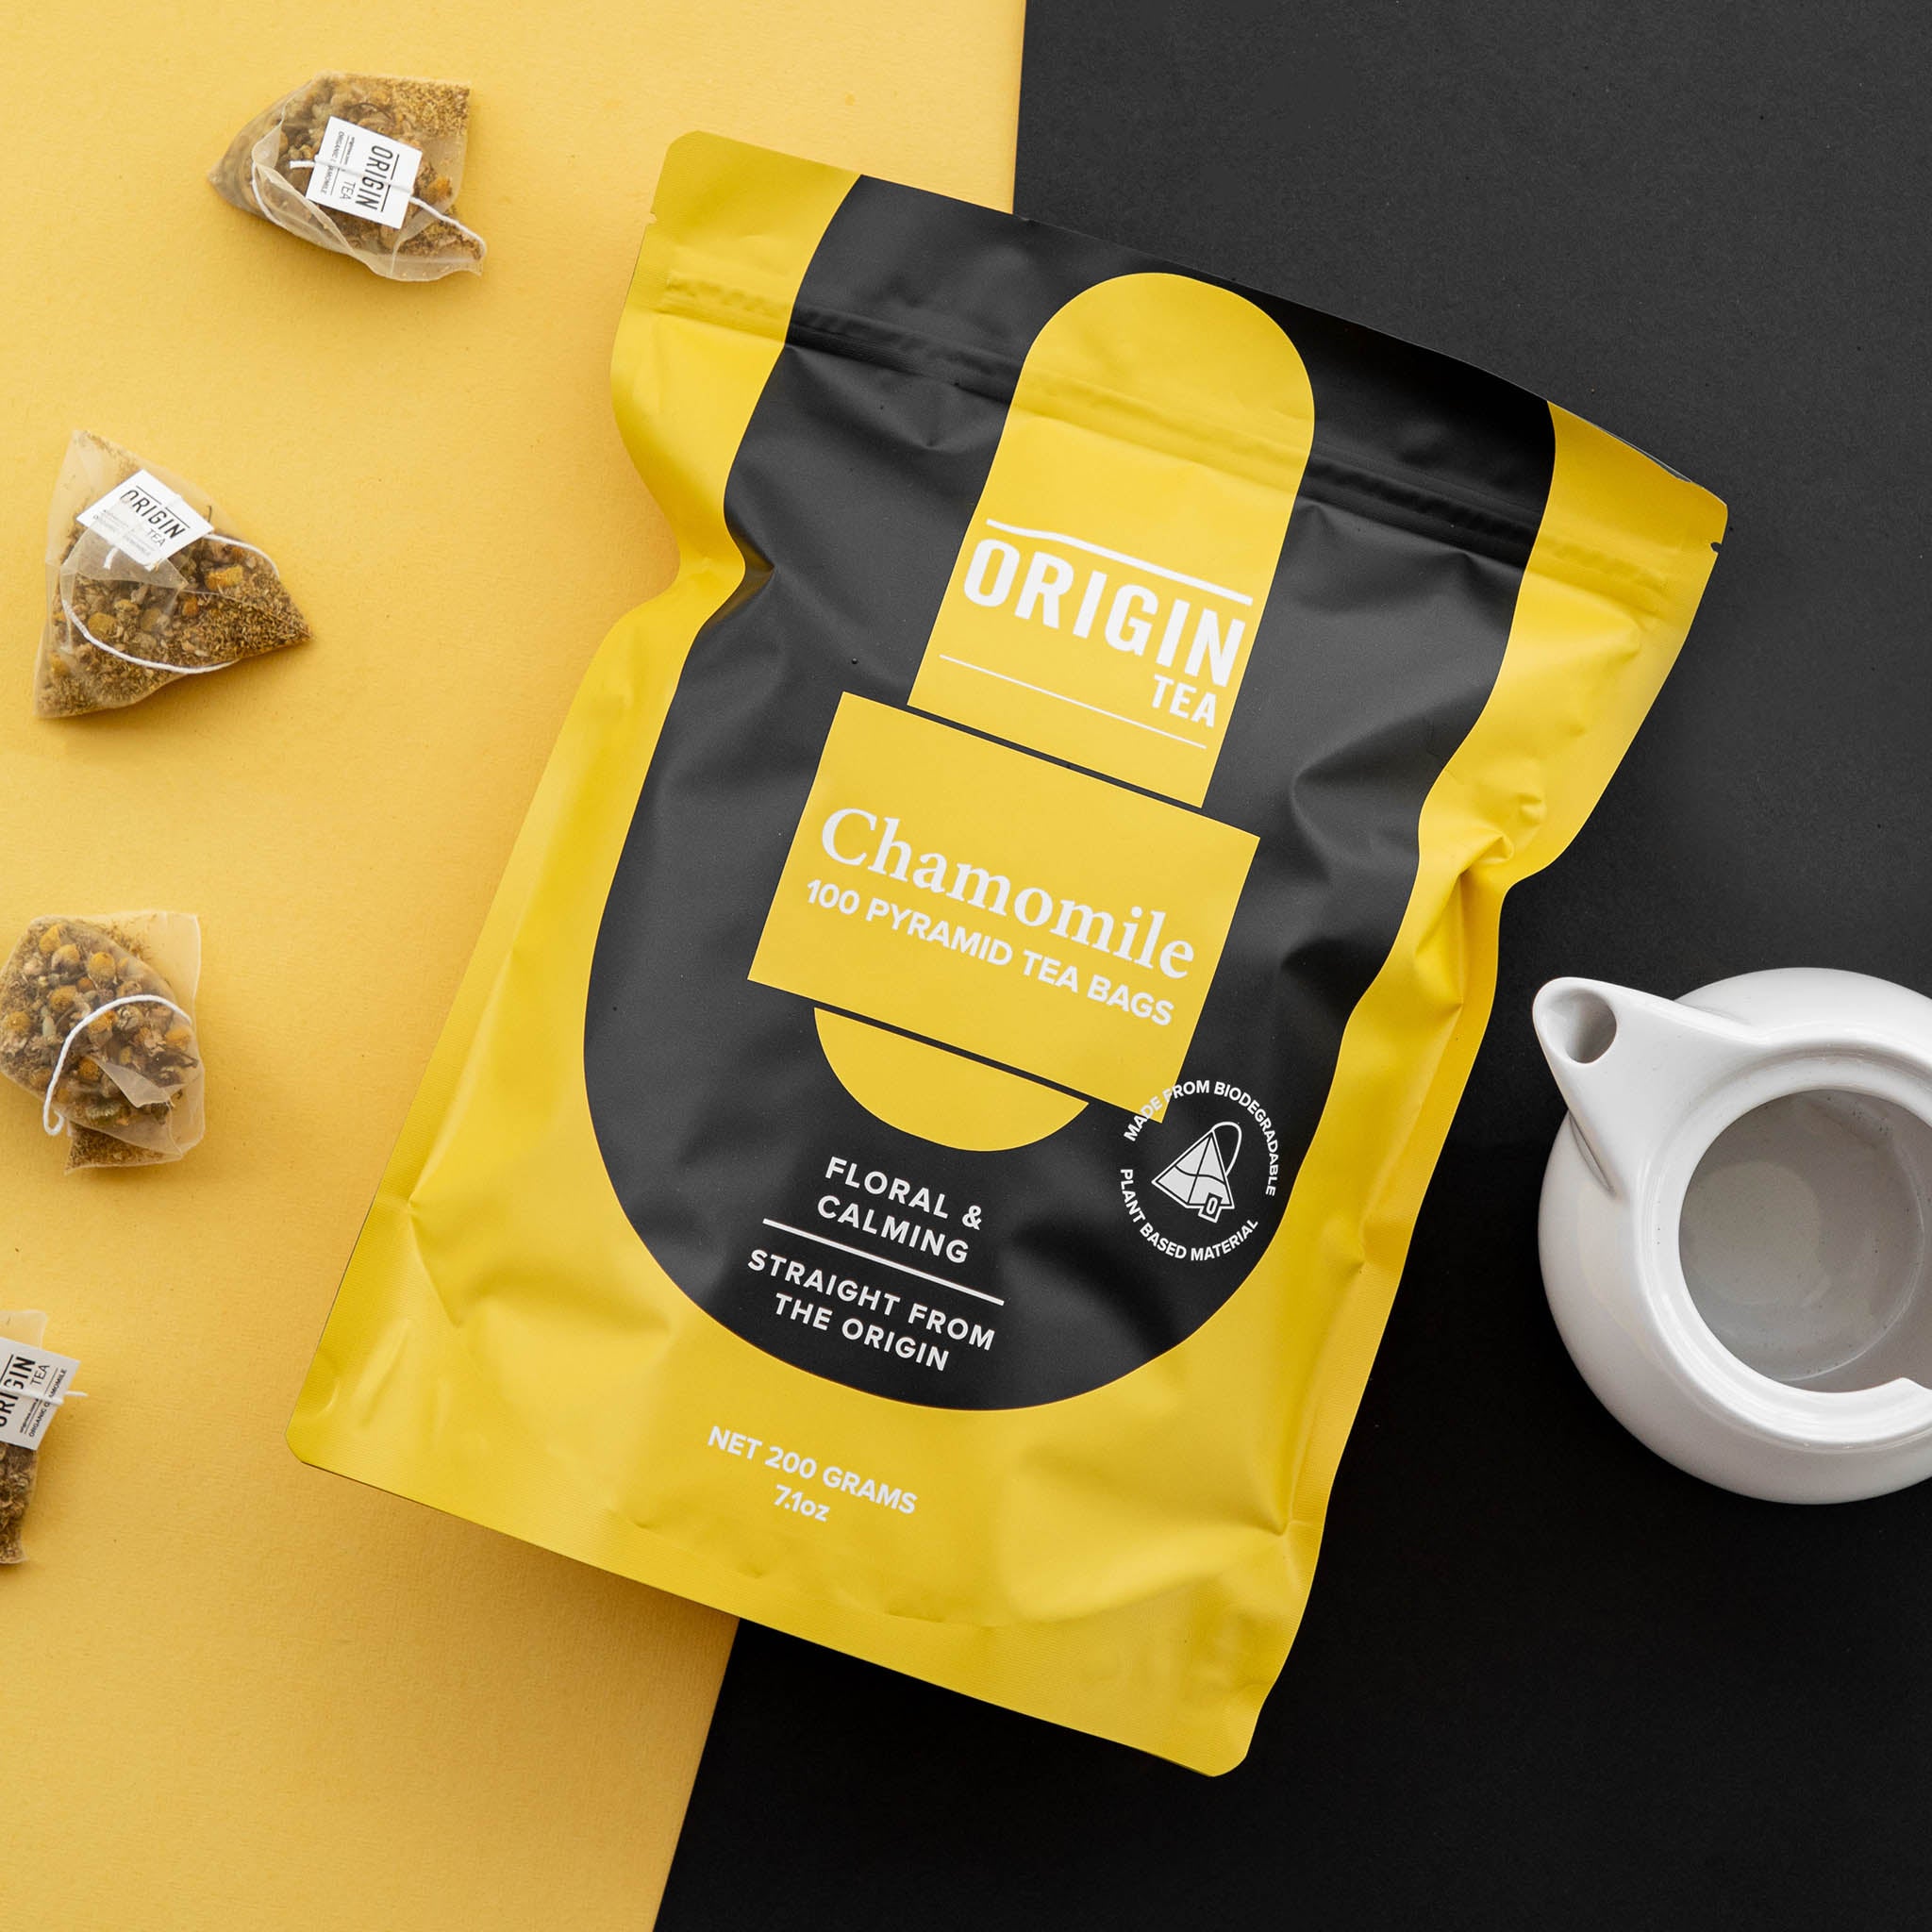 Chamomile Pyramid Tea Bags - Origin Tea